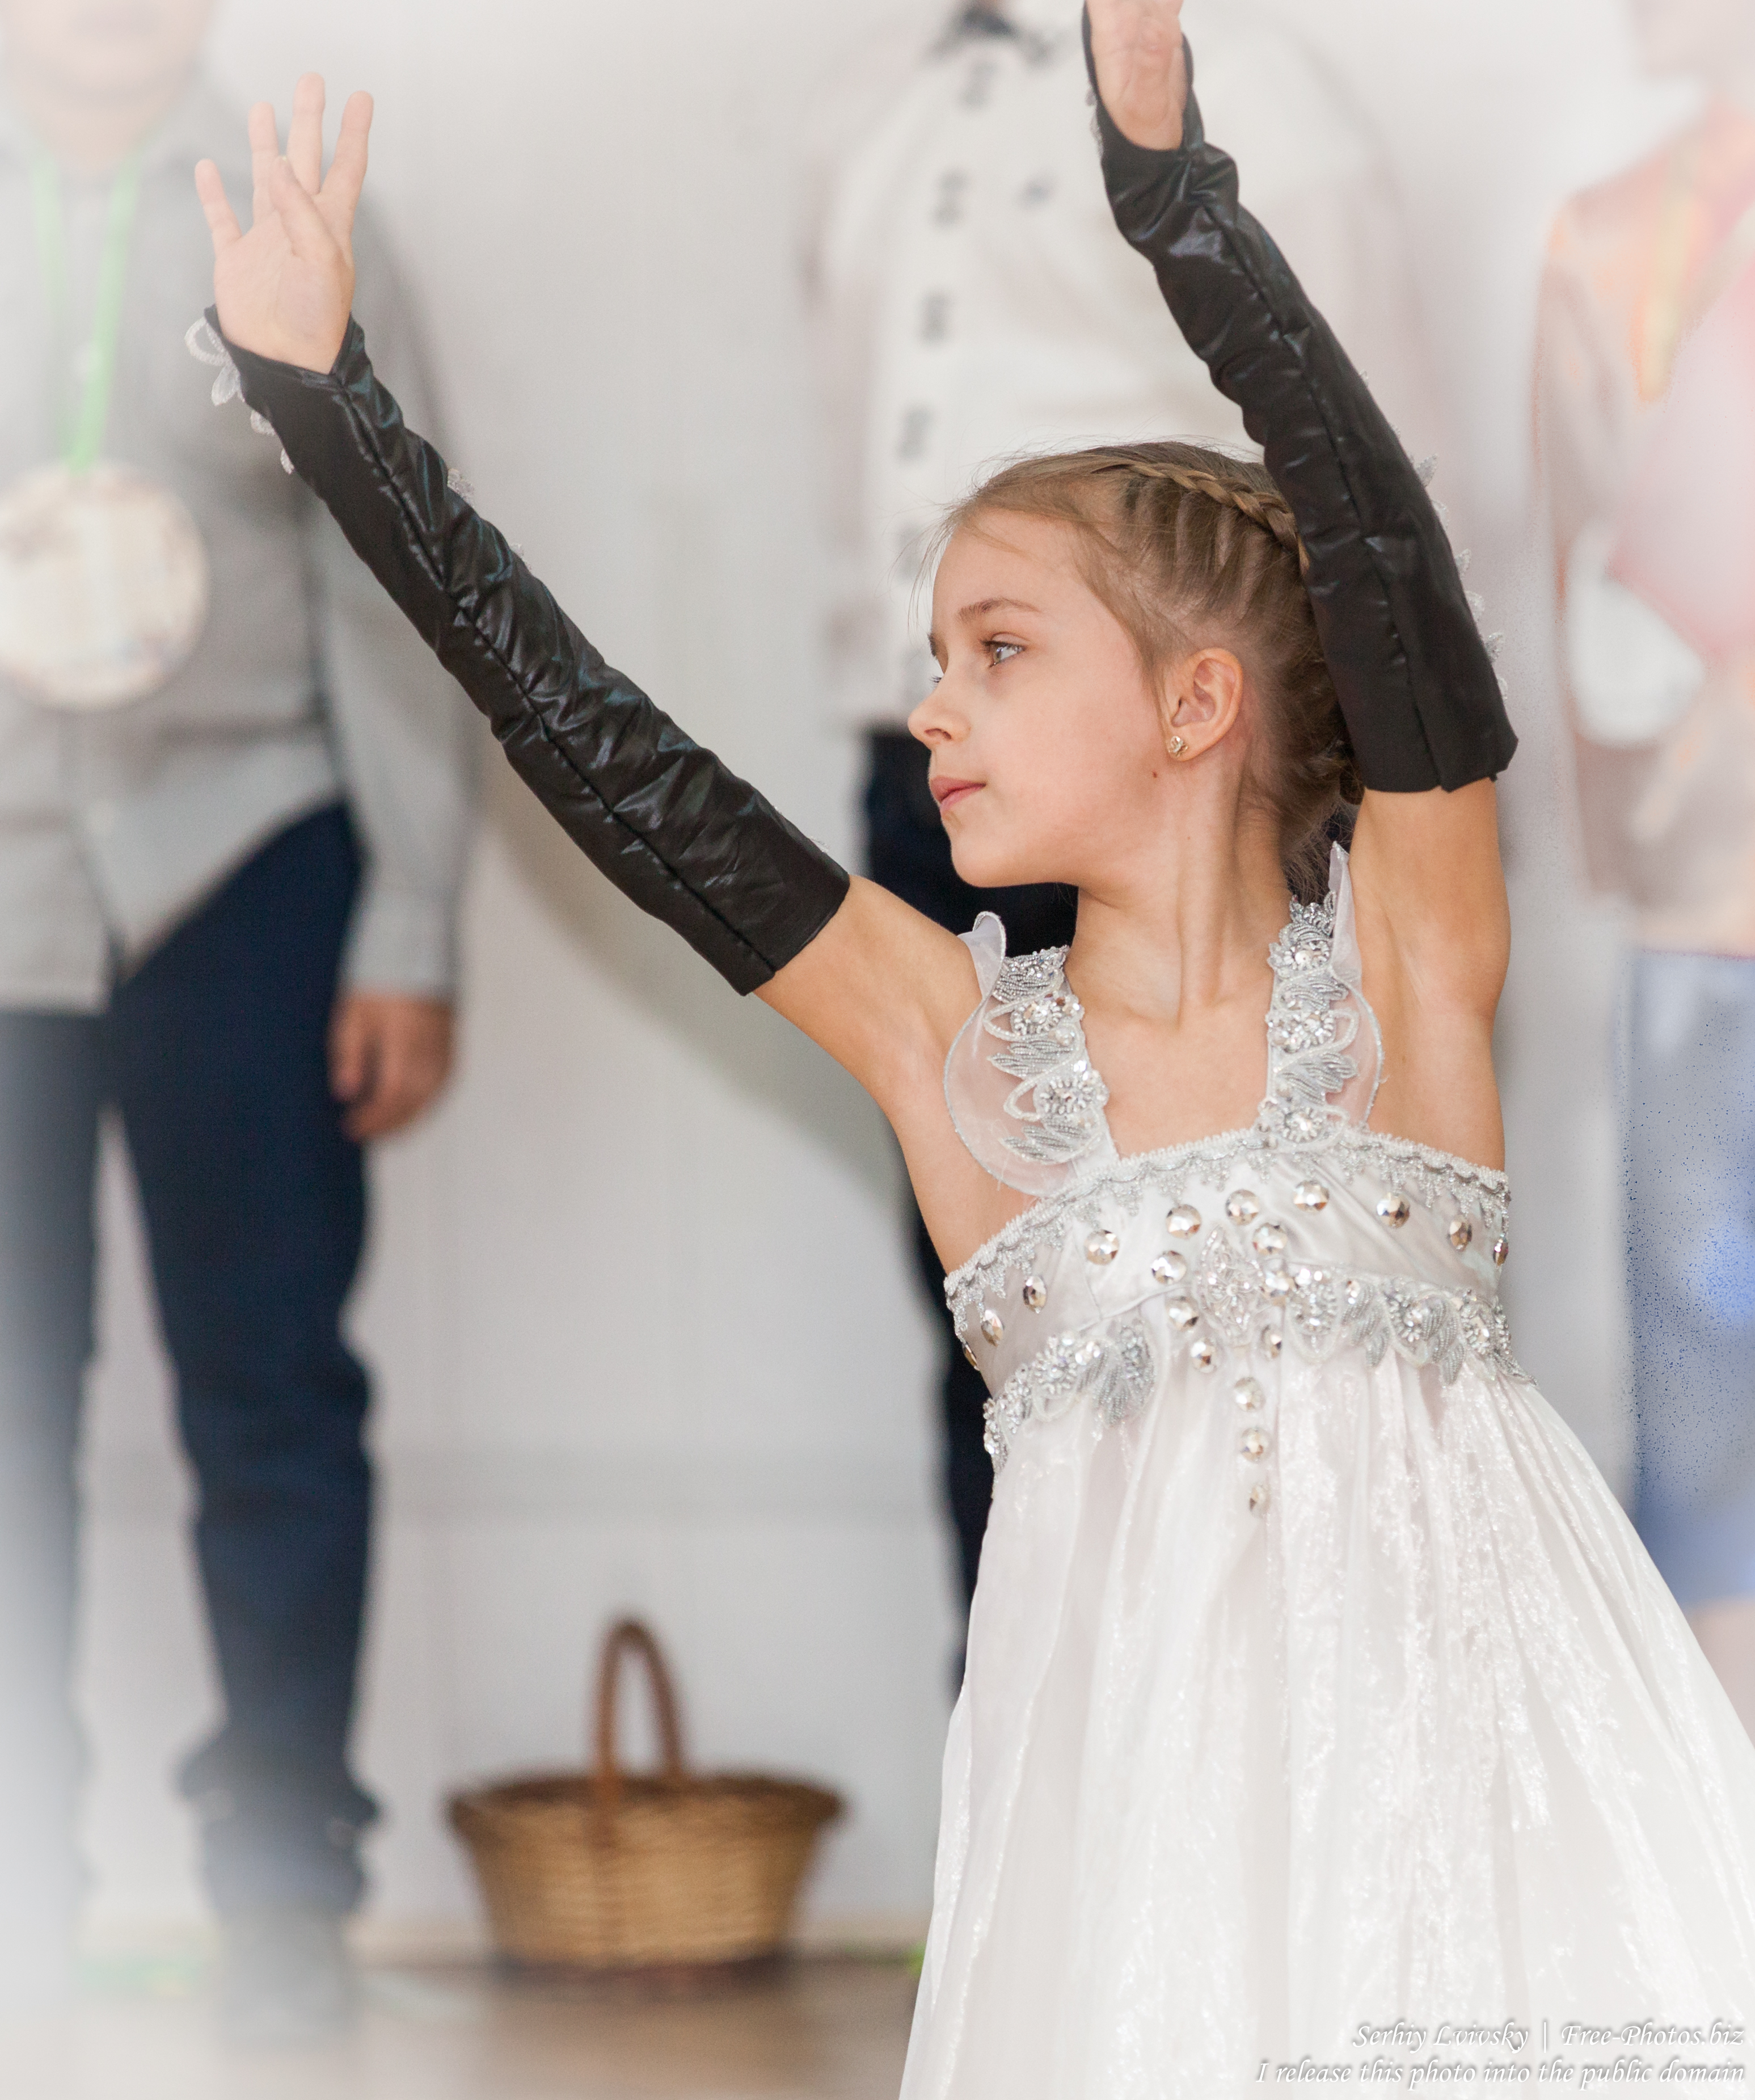 a cute schoolgirl dancing in March 2015, picture 2